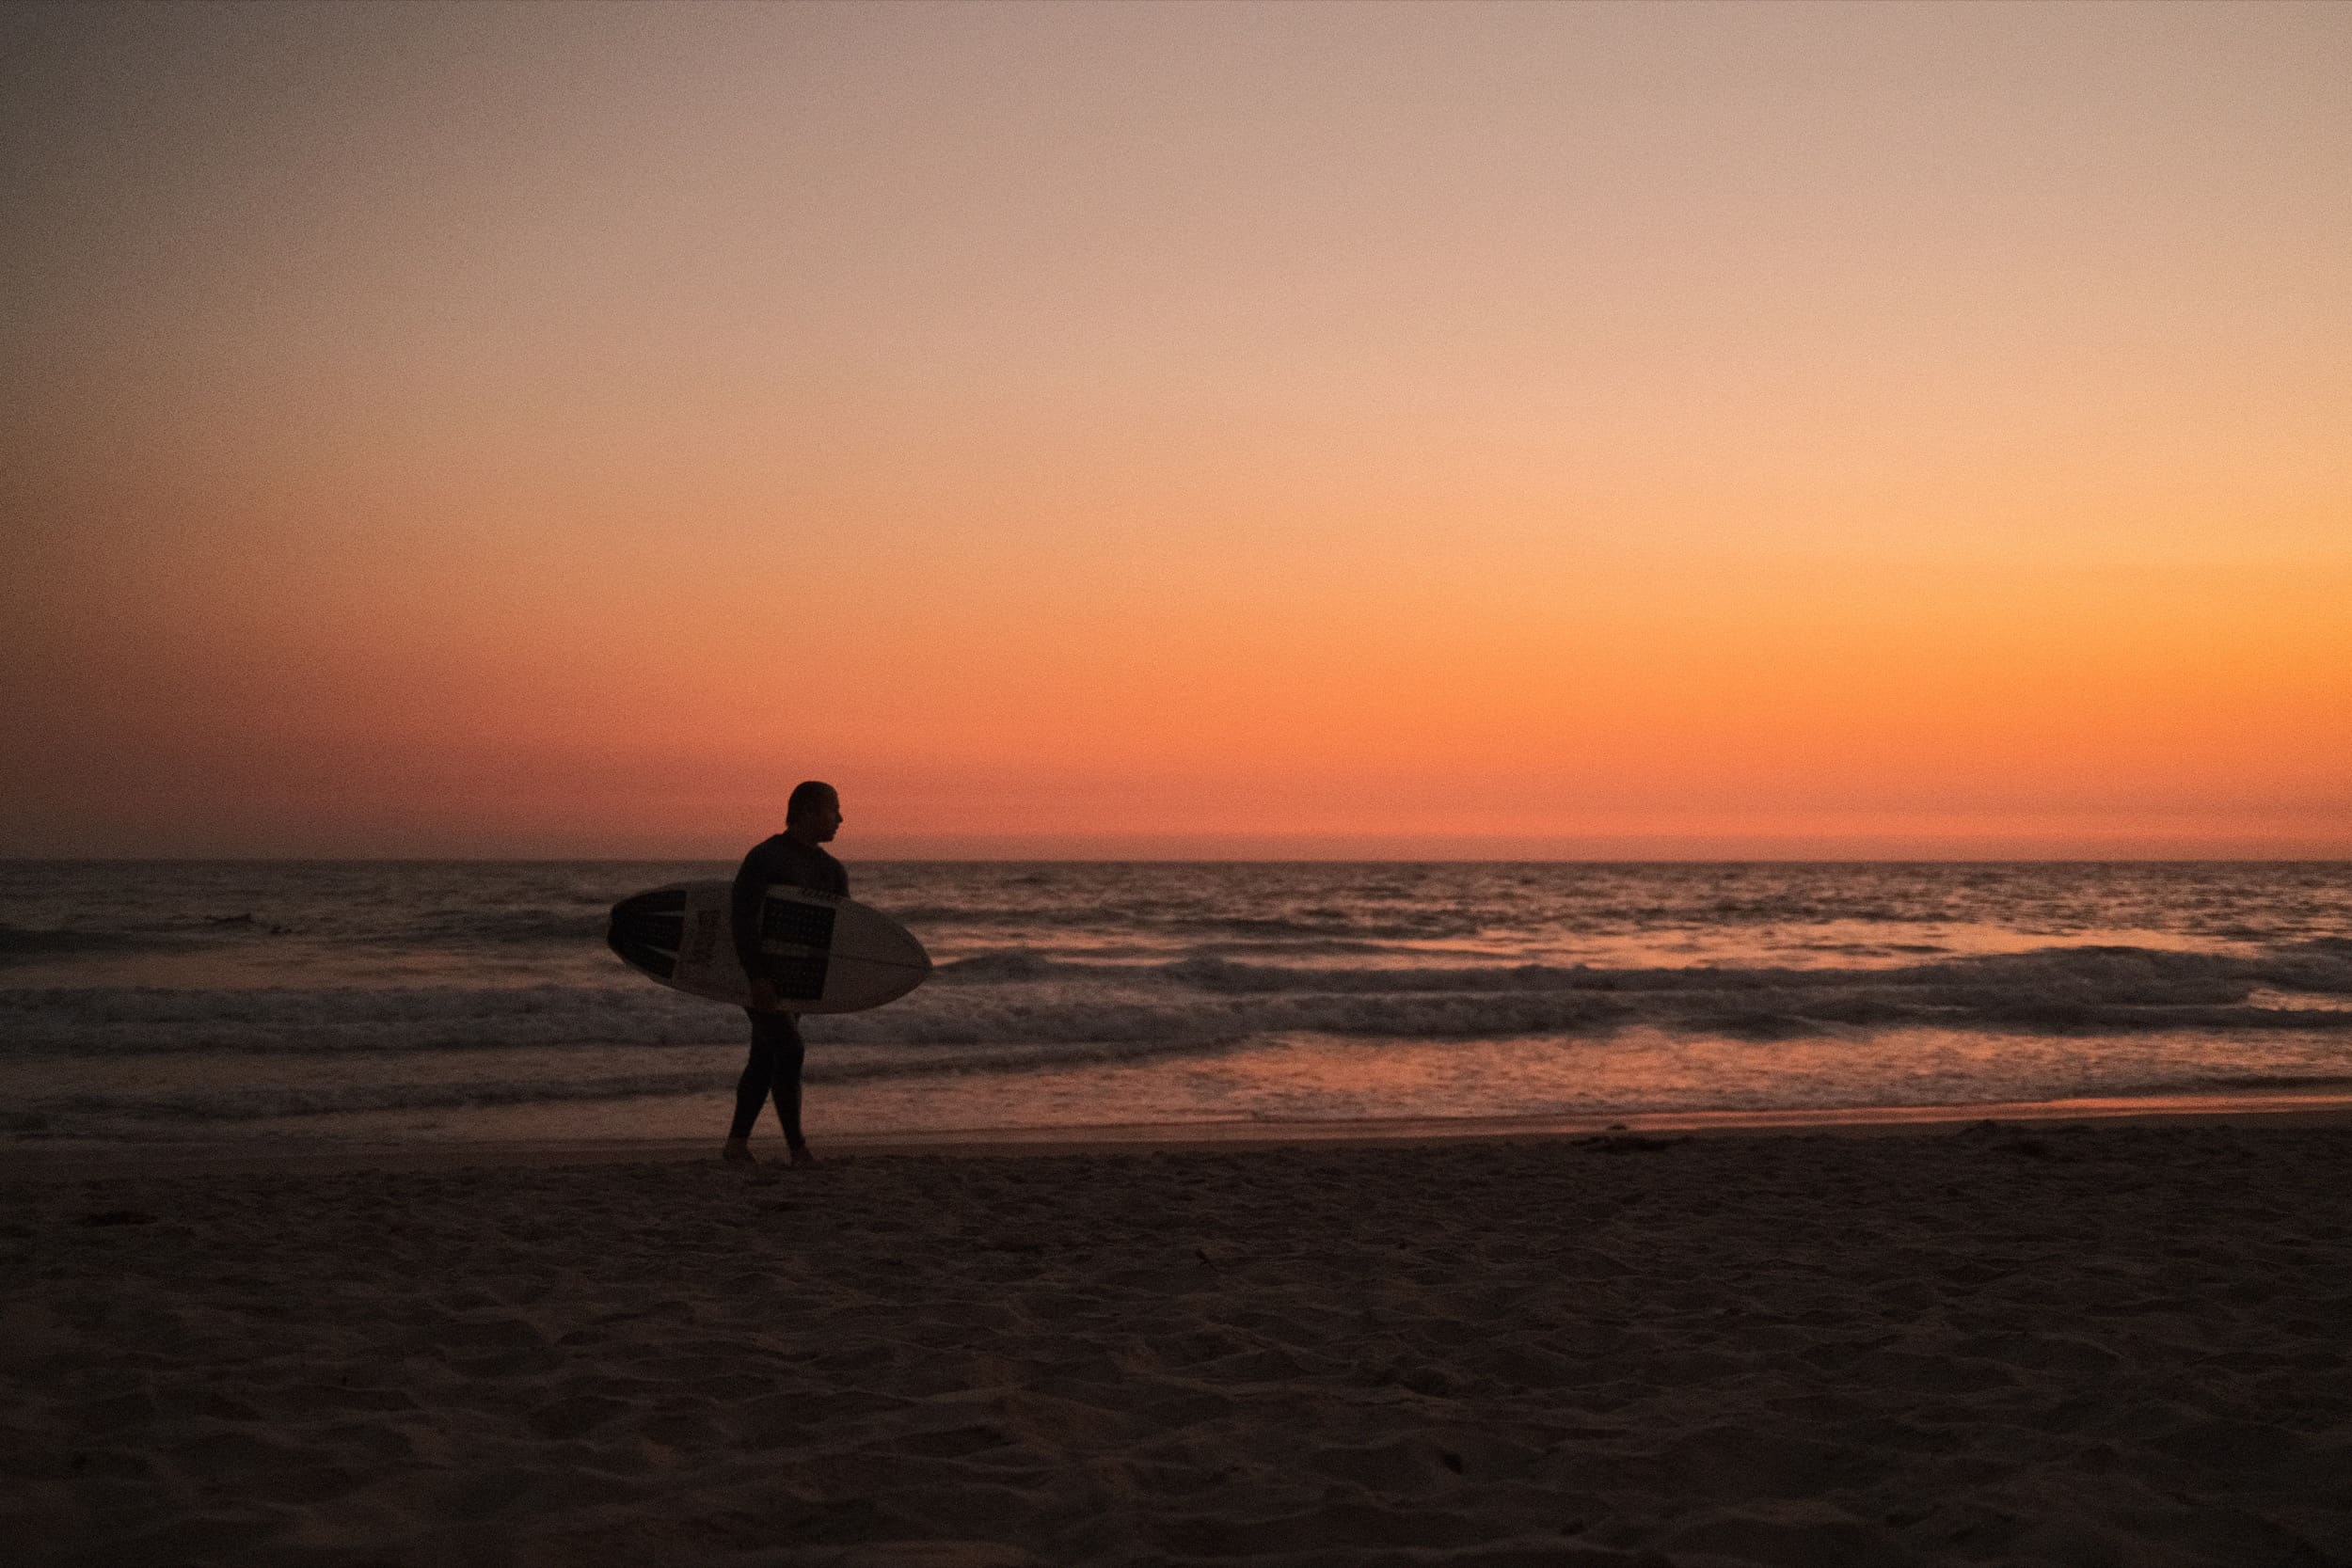 Surfer walks across beach at night